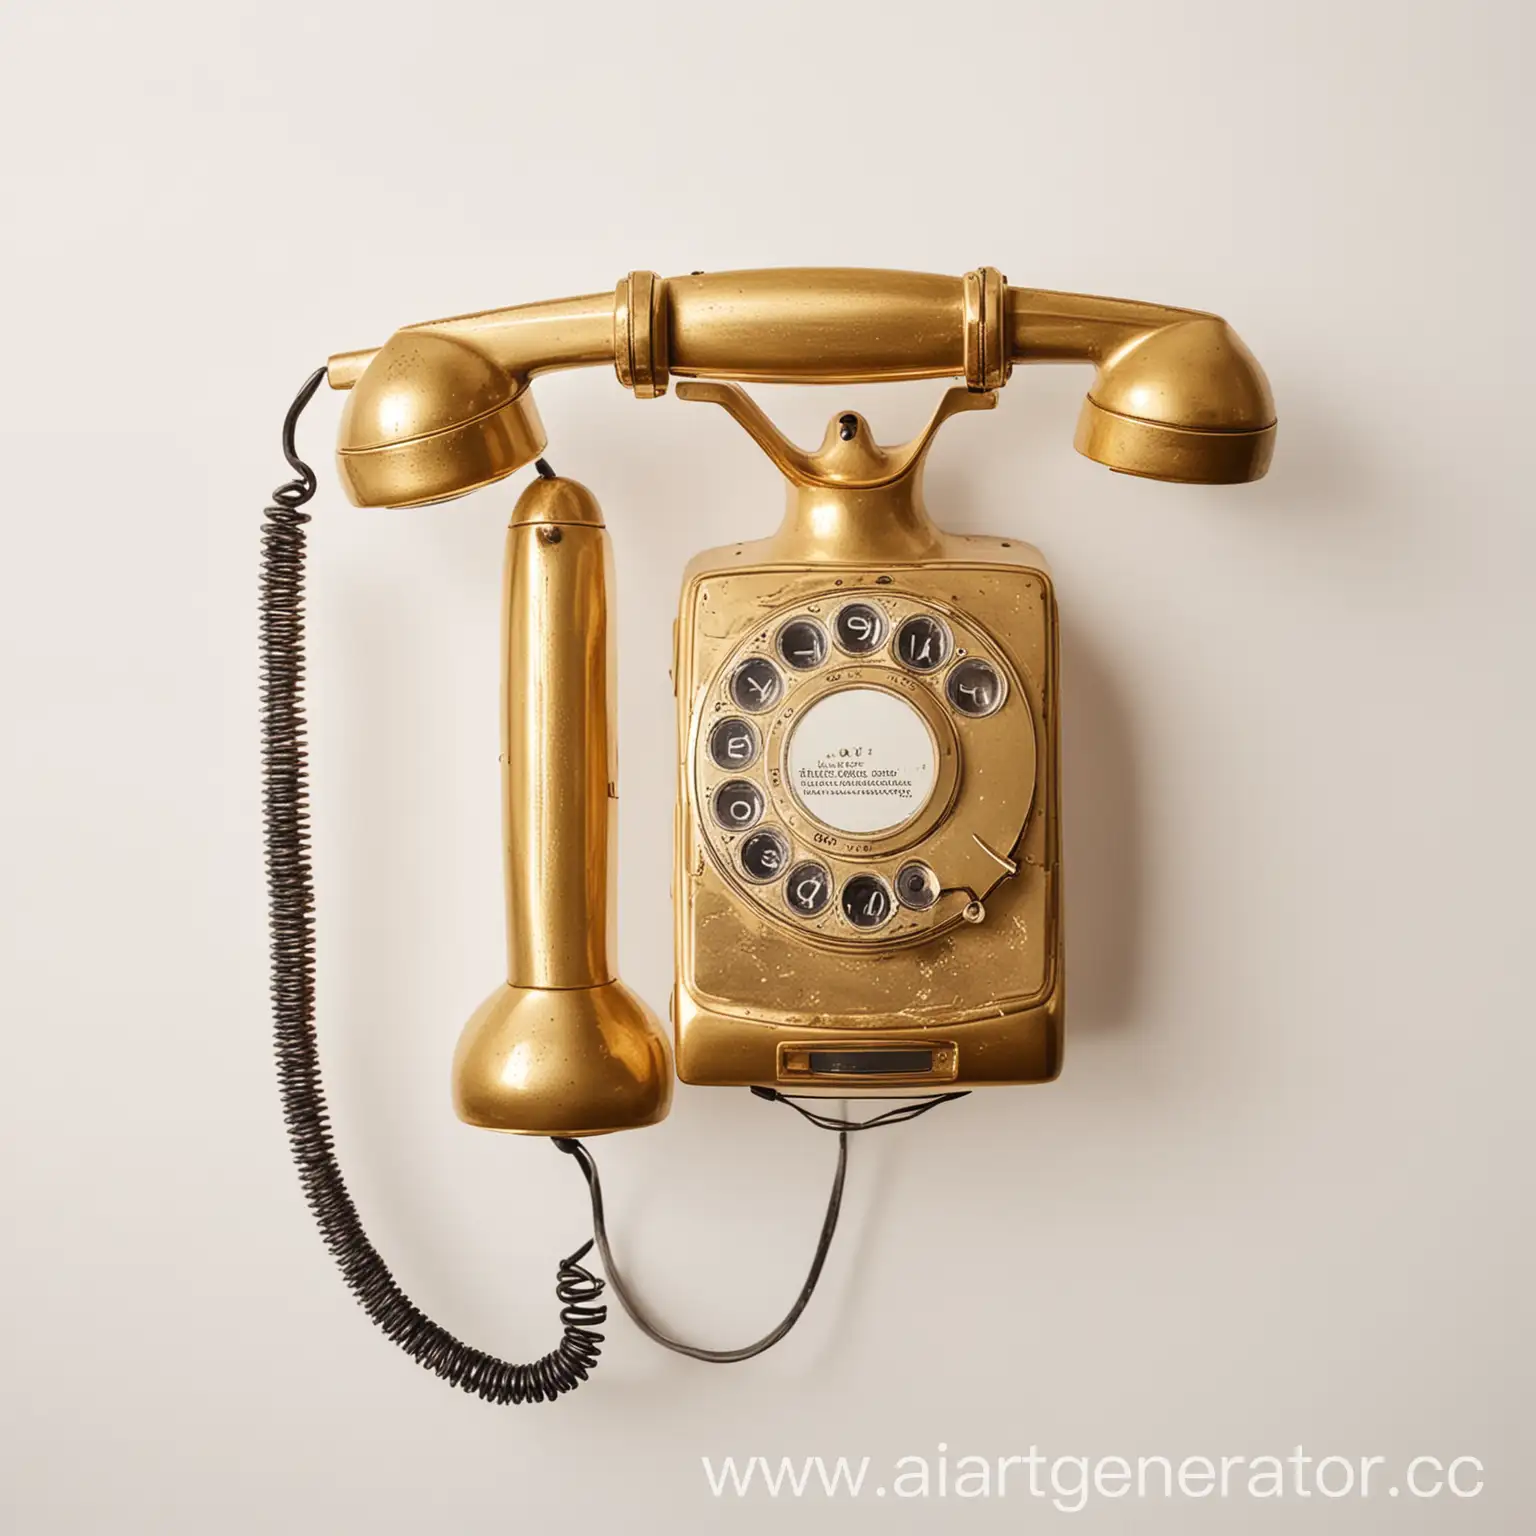 Vintage-Golden-Old-Phone-with-Hanging-Handset-on-White-Background